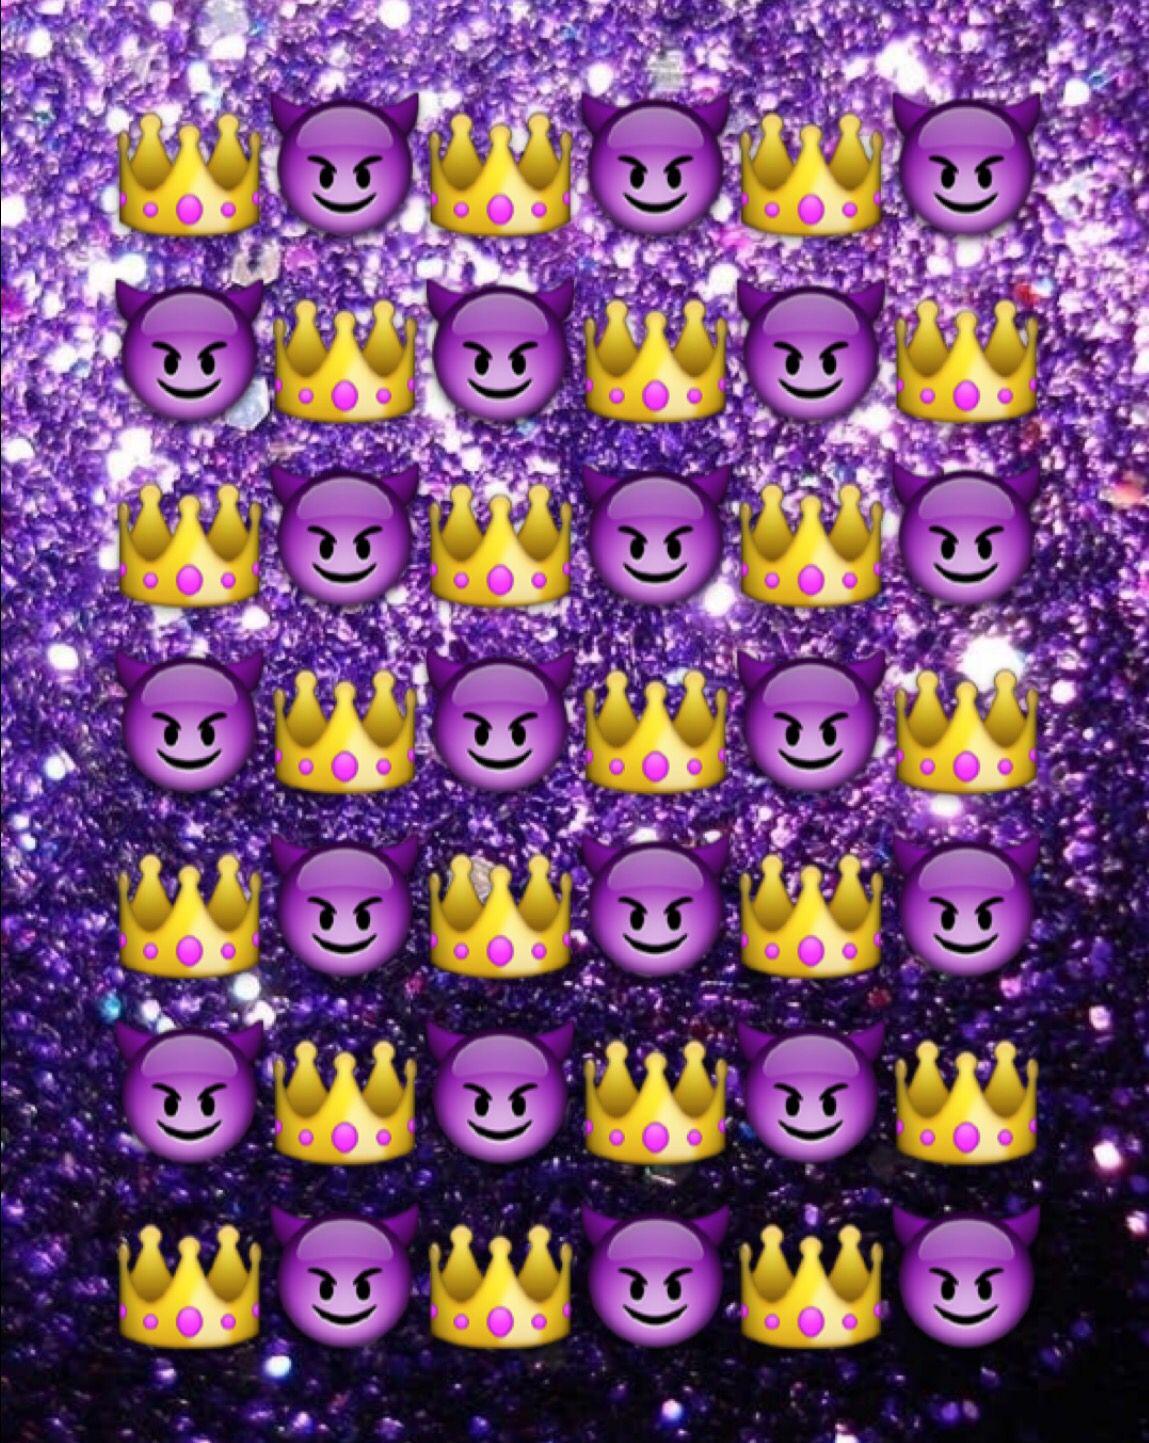 Best 57+ Emoji Backgrounds on HipWallpapers